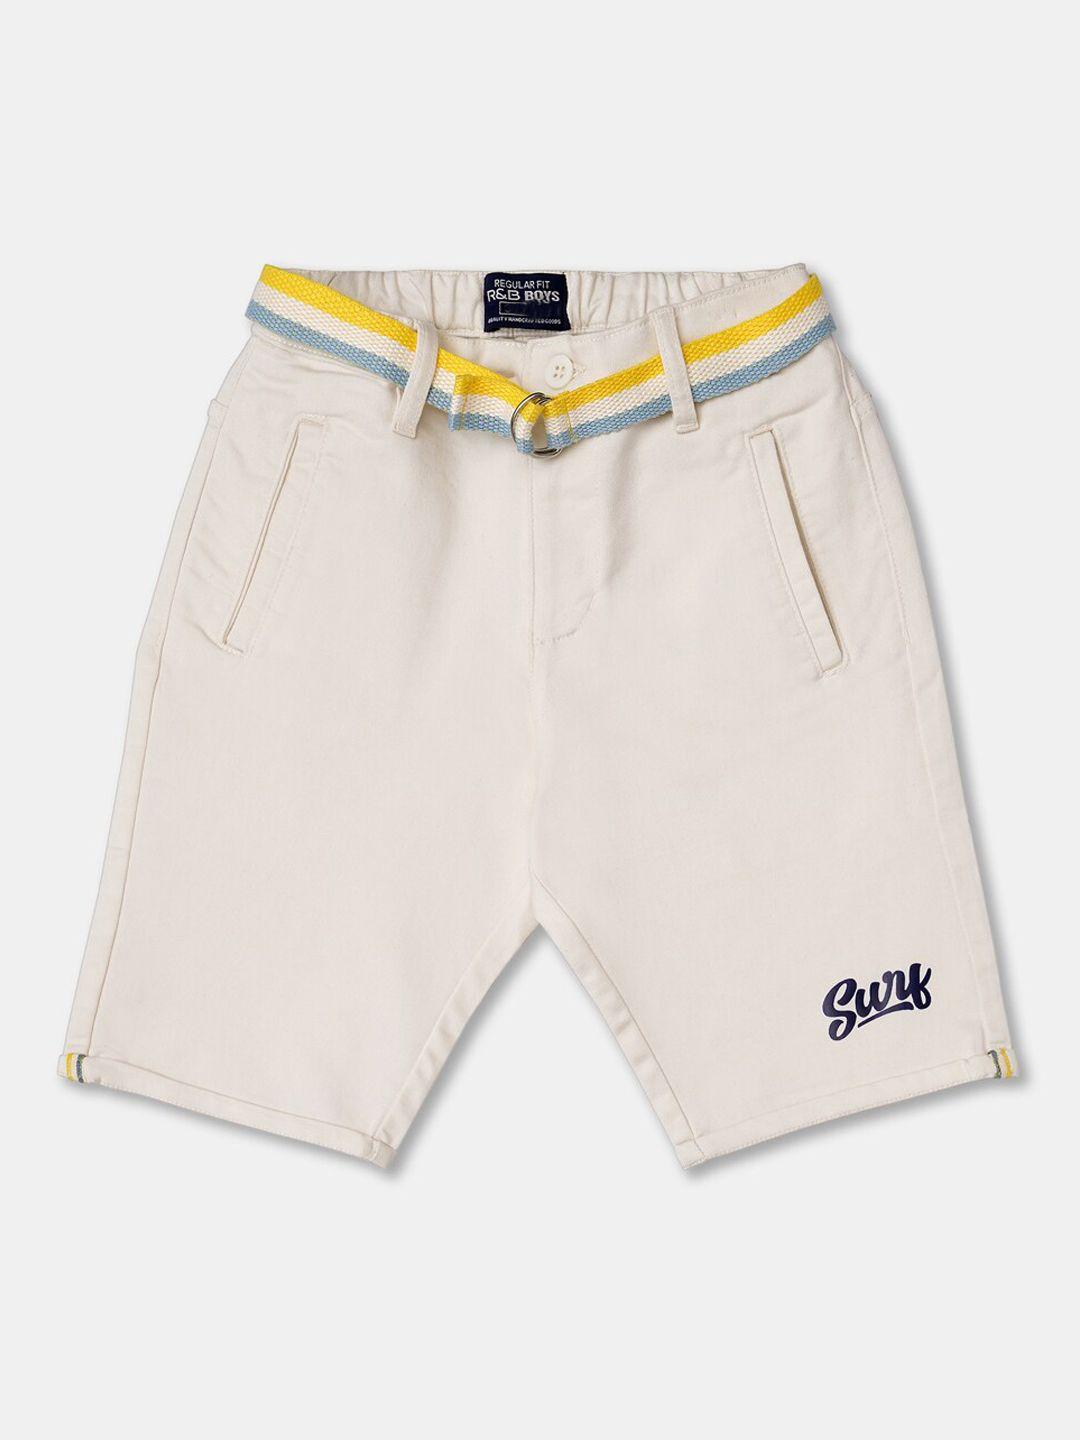 r&b-boys-white-shorts